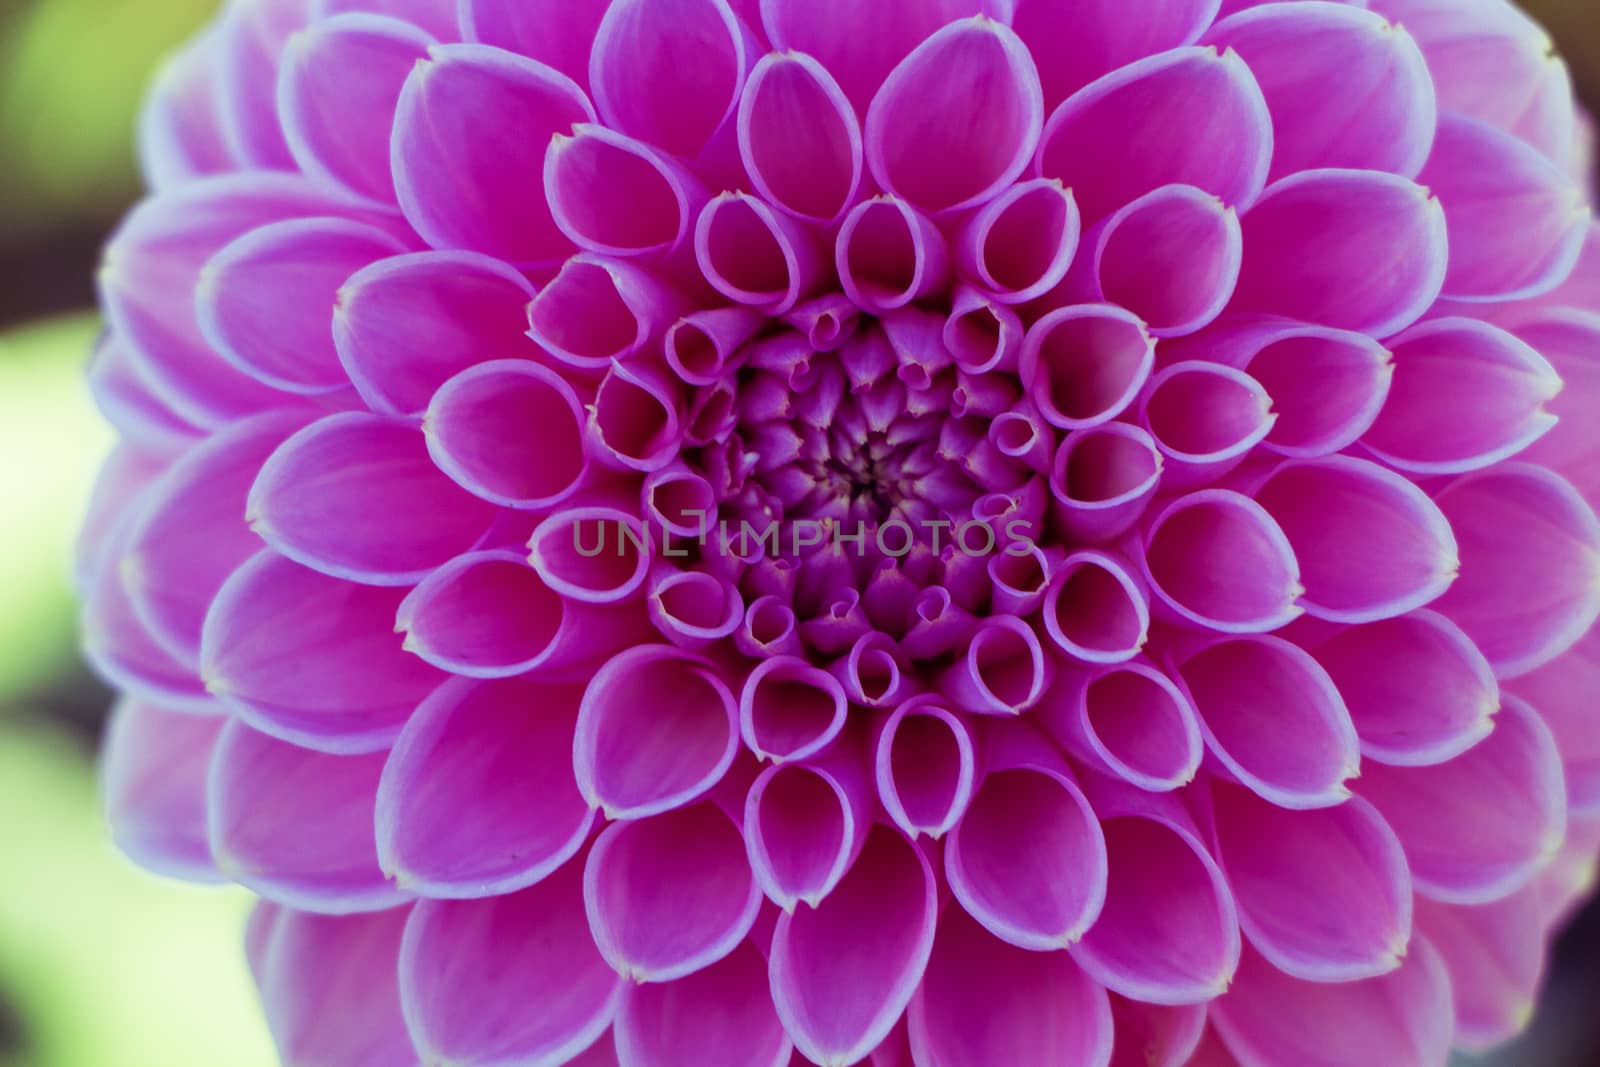 Closeup on symmetrical pink flower in autumn.